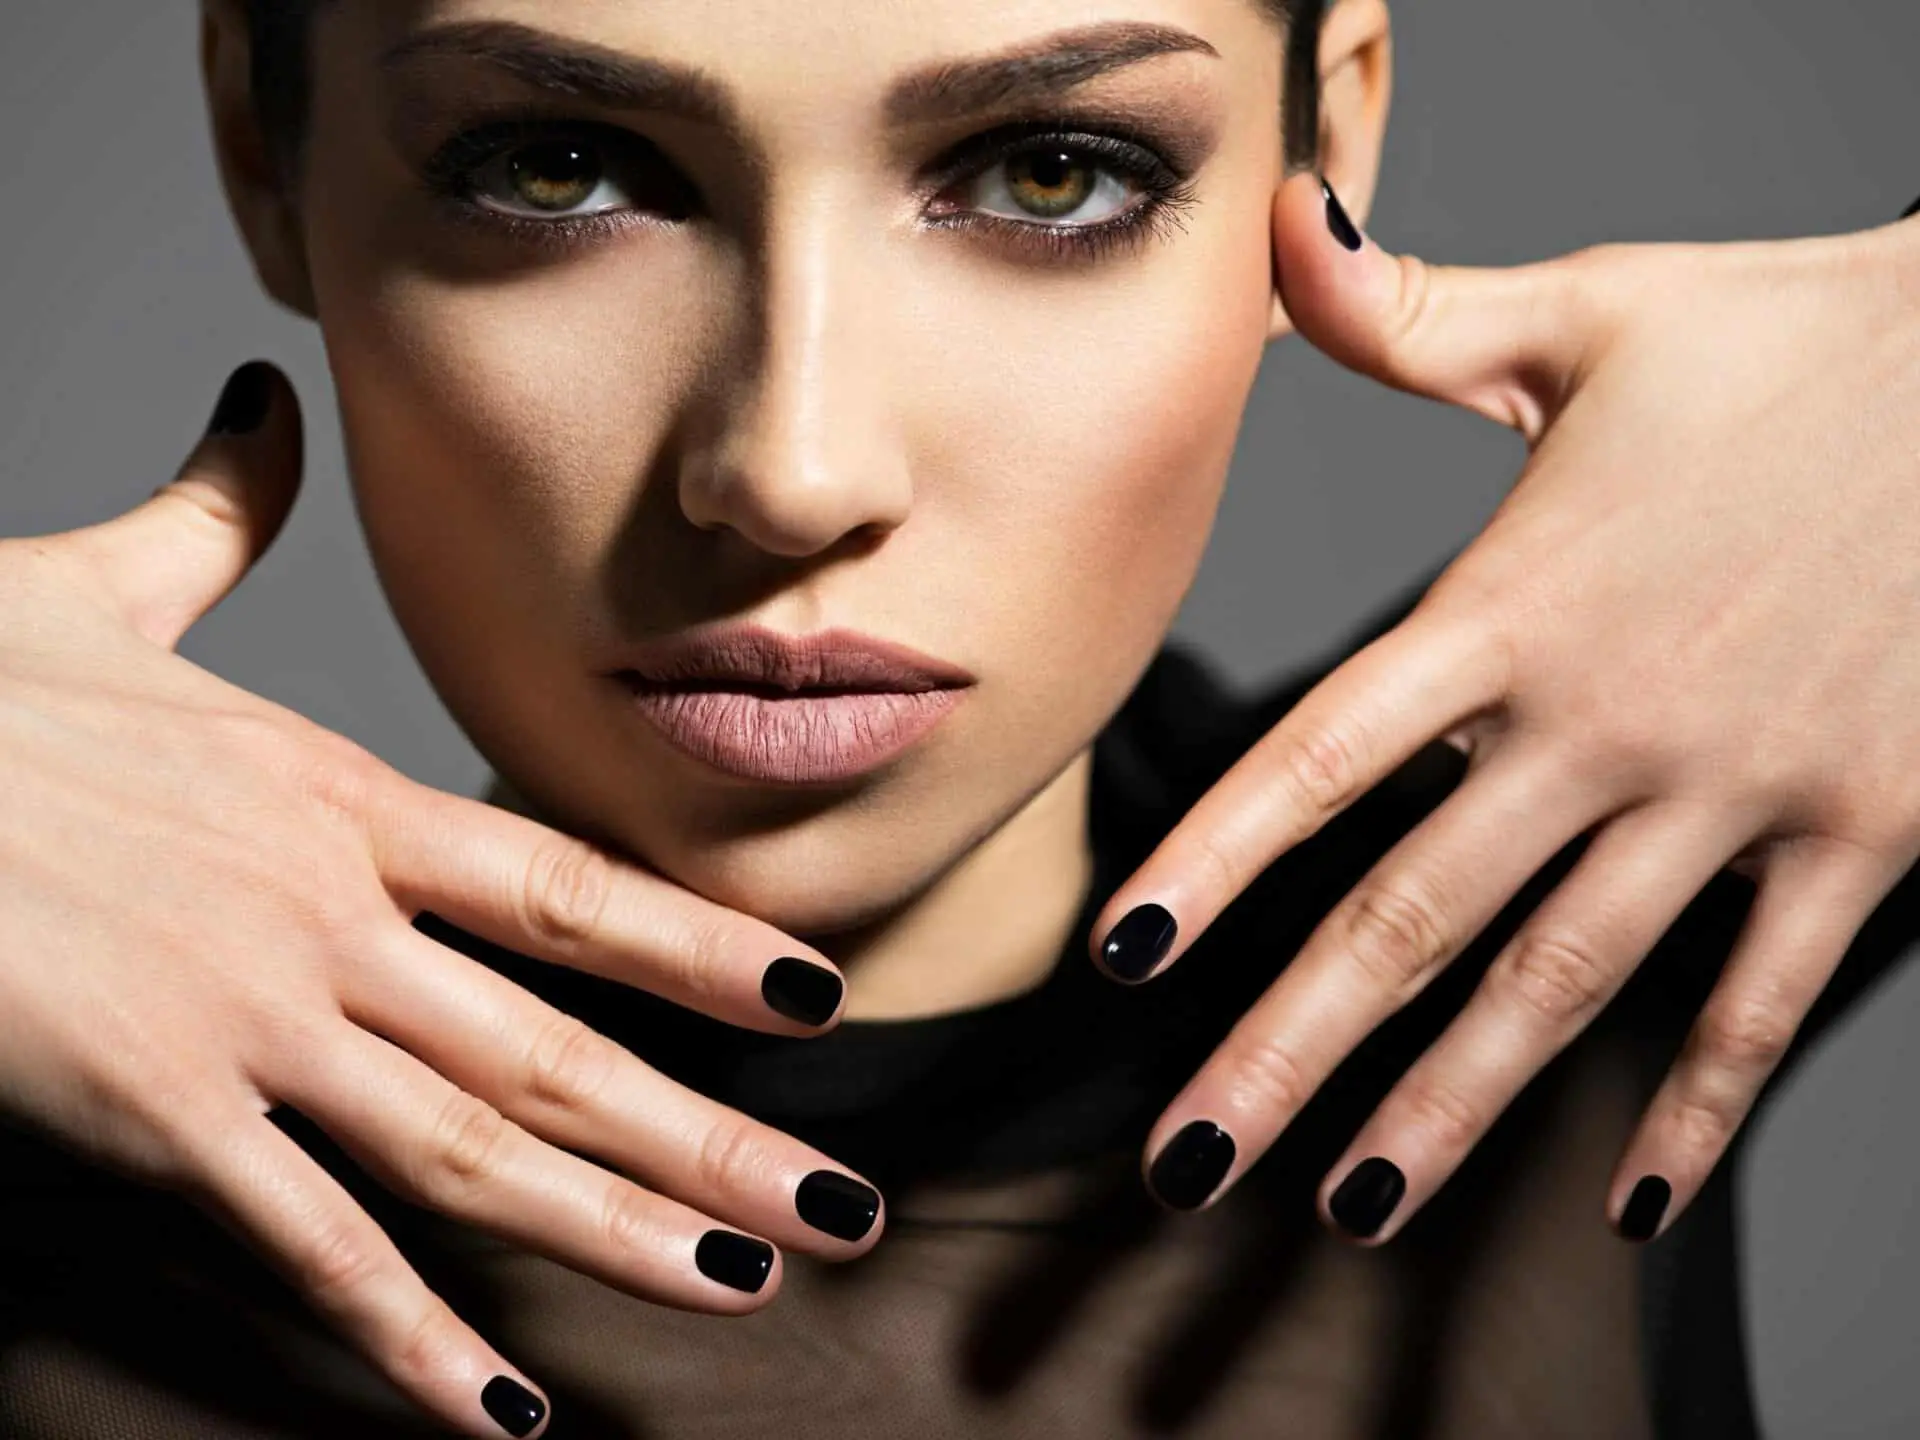 This Dubai beauty salon is installing microchips in customers' fingernails